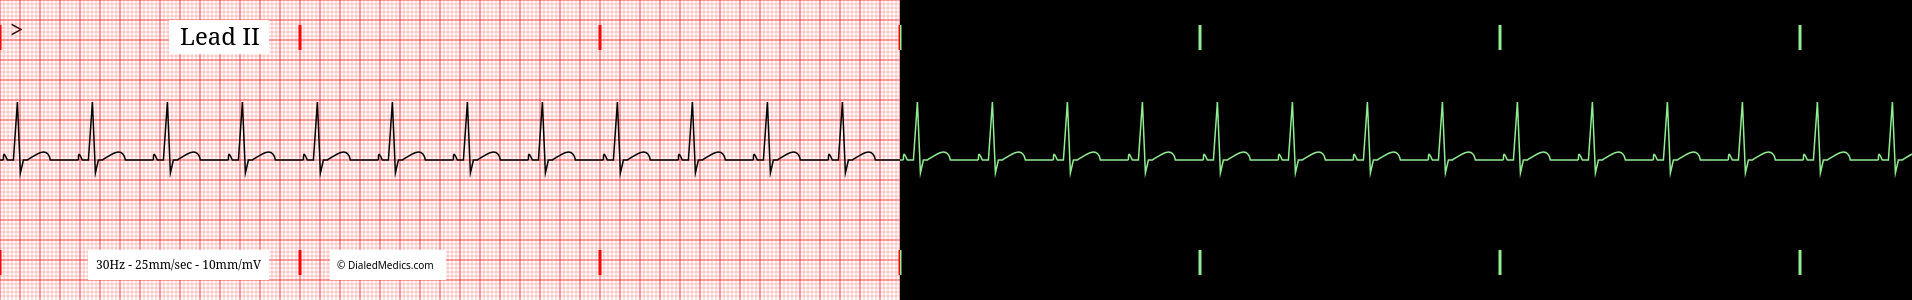 NSR / RSR example EKG / ECG, split printout / monitor display.